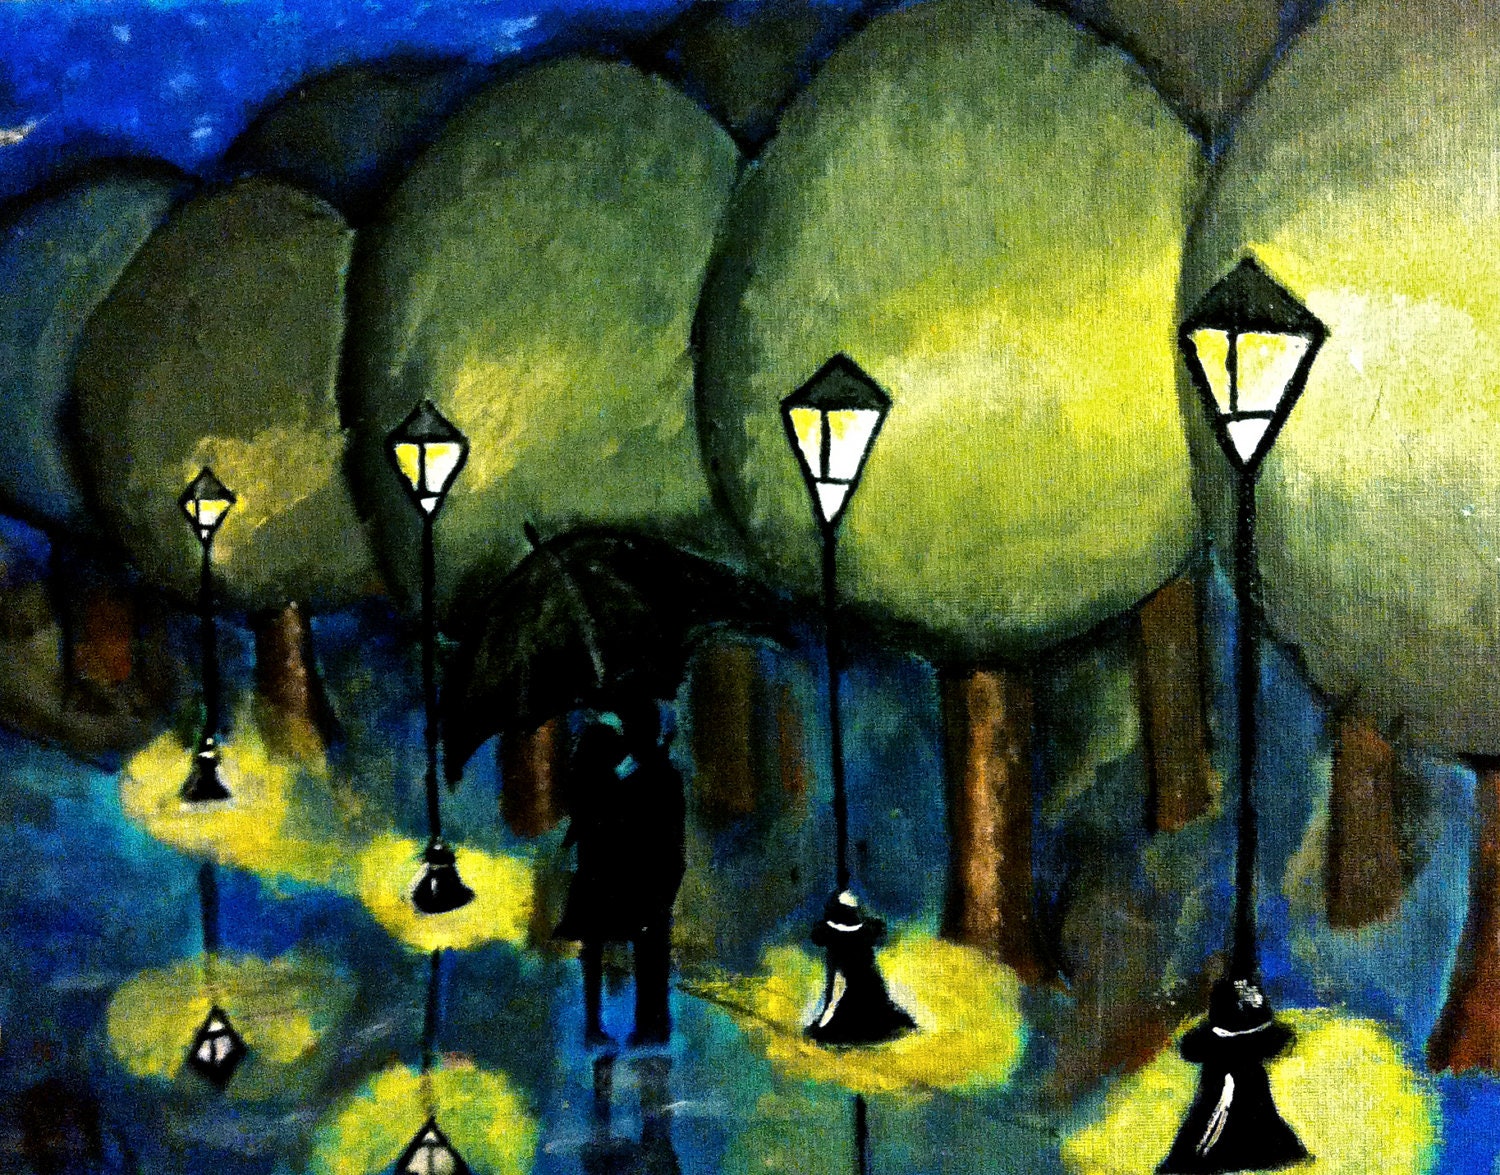 10% off sale Silhouettes in the Park 8x10.5 print if original painting by Amanda Pennington - PenningtonArt